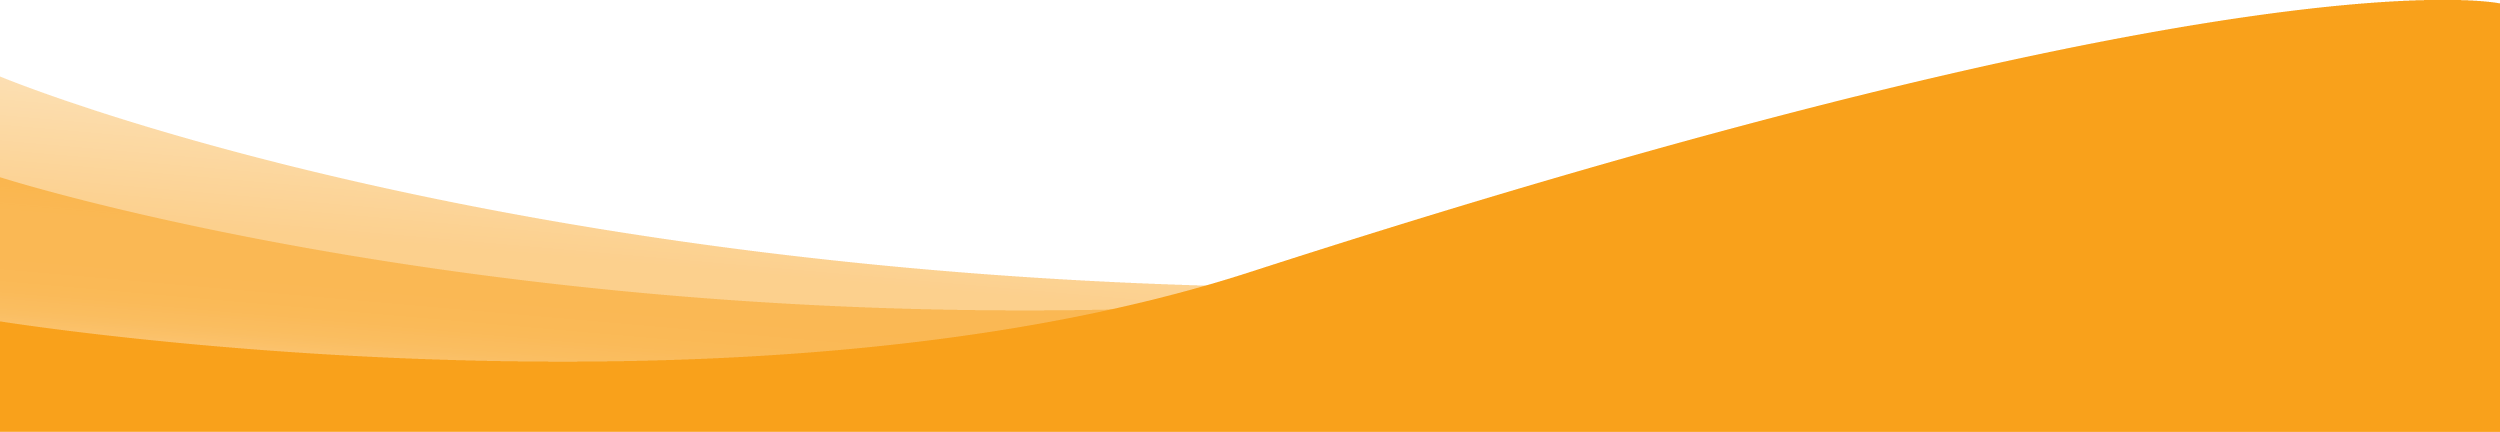 Linee astratte arancione Immagine PNG